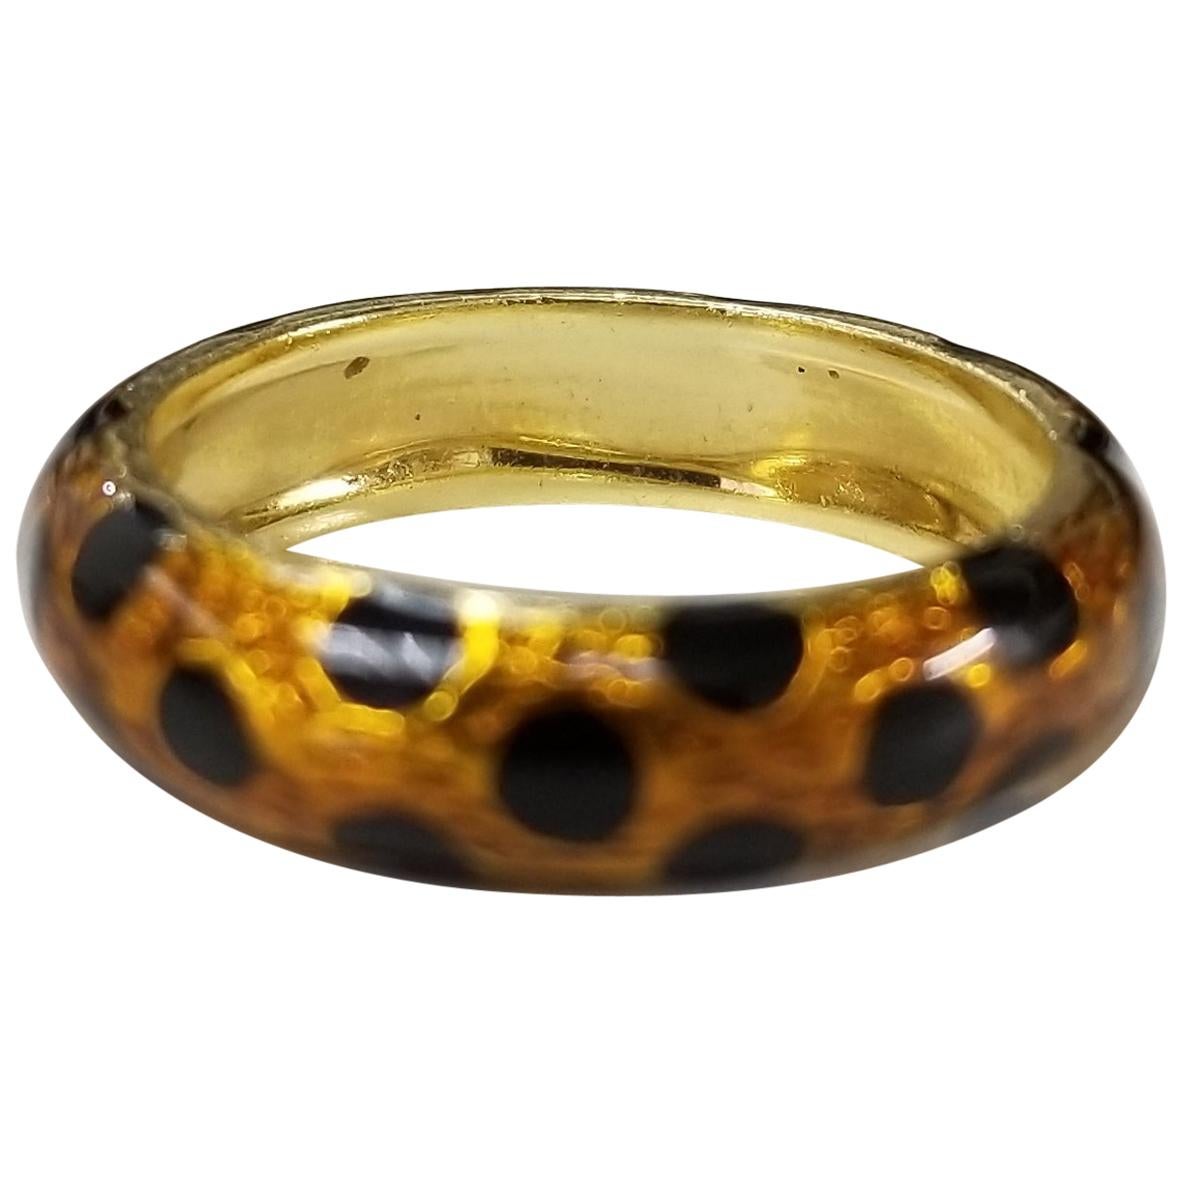 Hidalgo 18 Karat Gold and Enamel Ring with Orange Leopard and Black Enamel